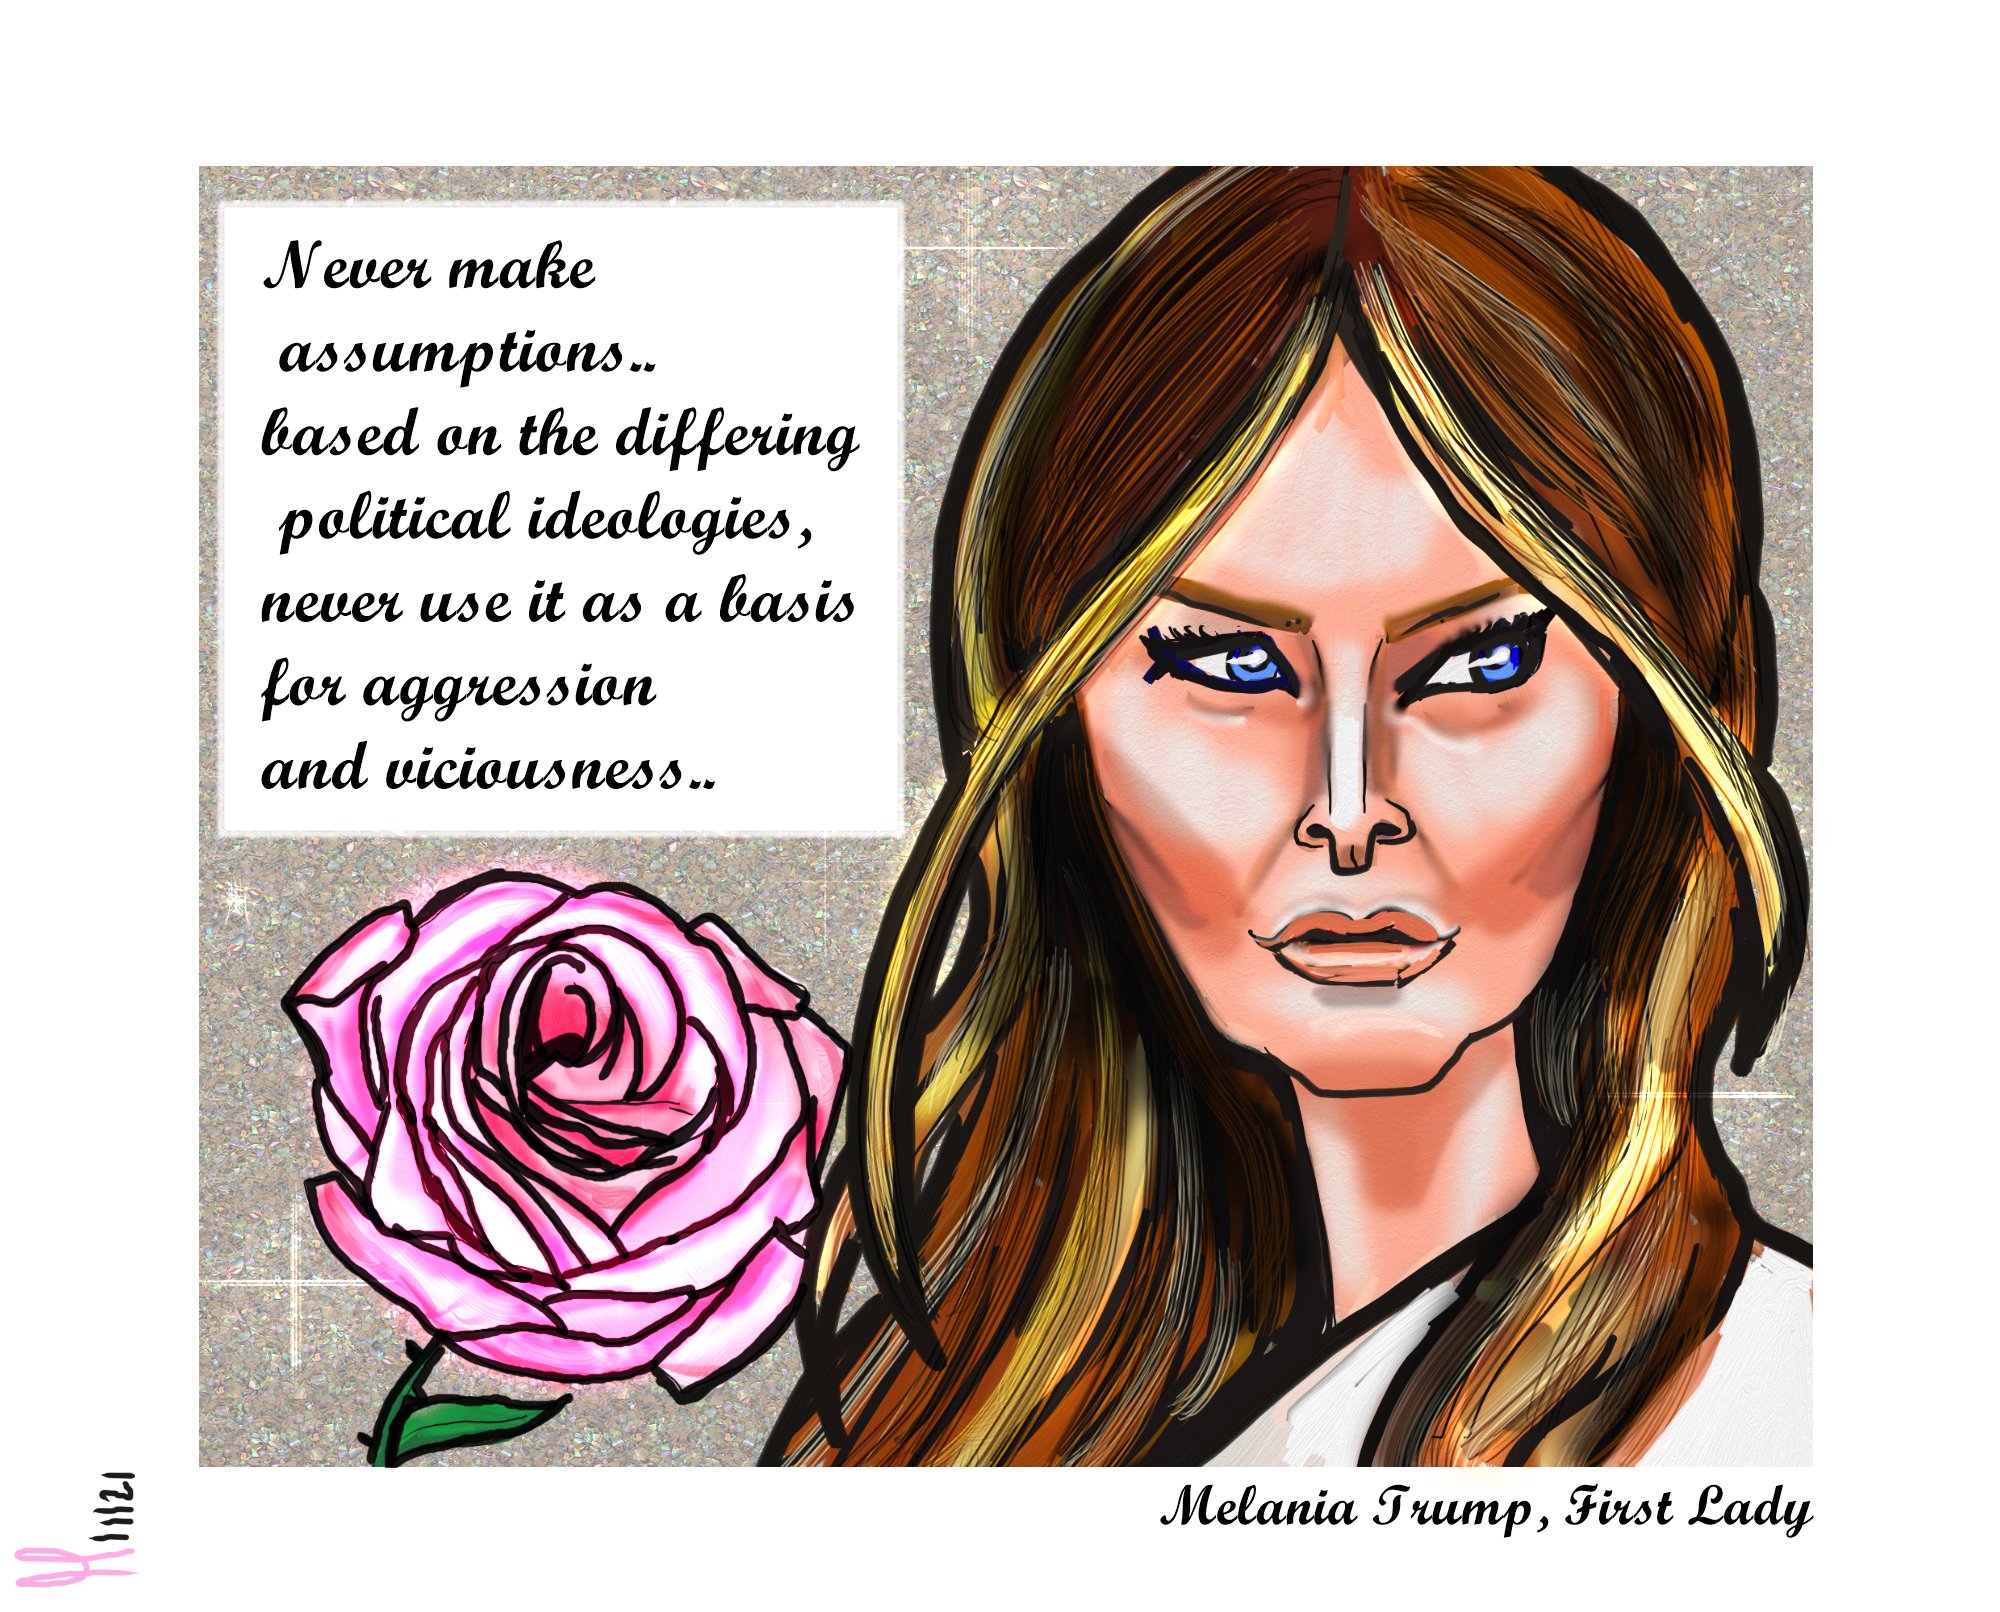 Melania Trump FLOTUS White House political editorial cartoon for President Donald Trump post thumbnail image